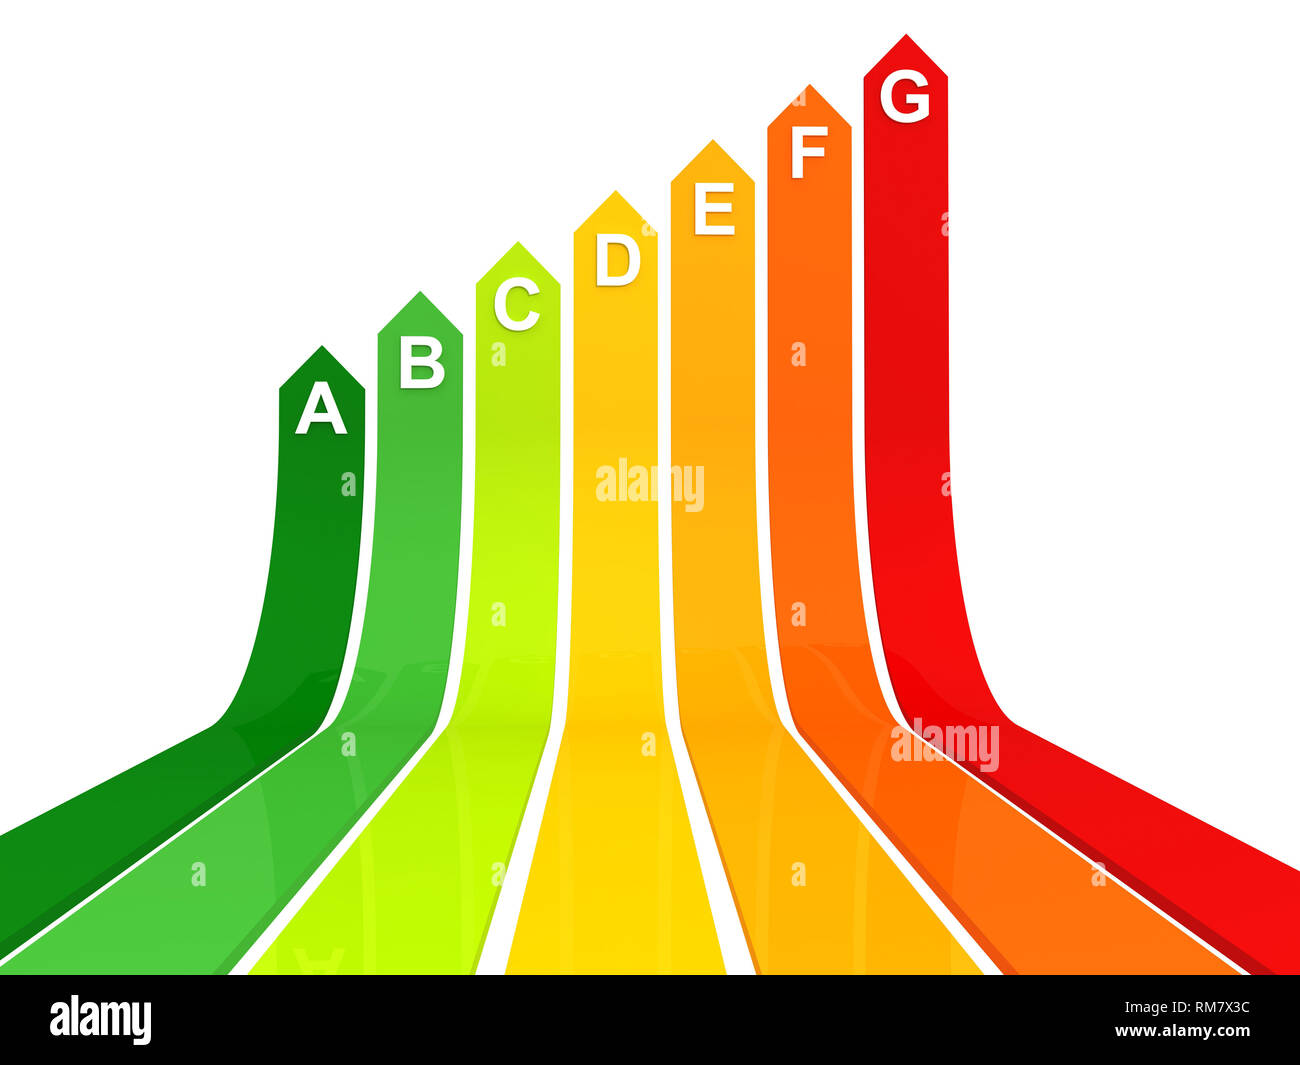 energy efficiency bar chart 3d illustration isolated on white background Stock Photo